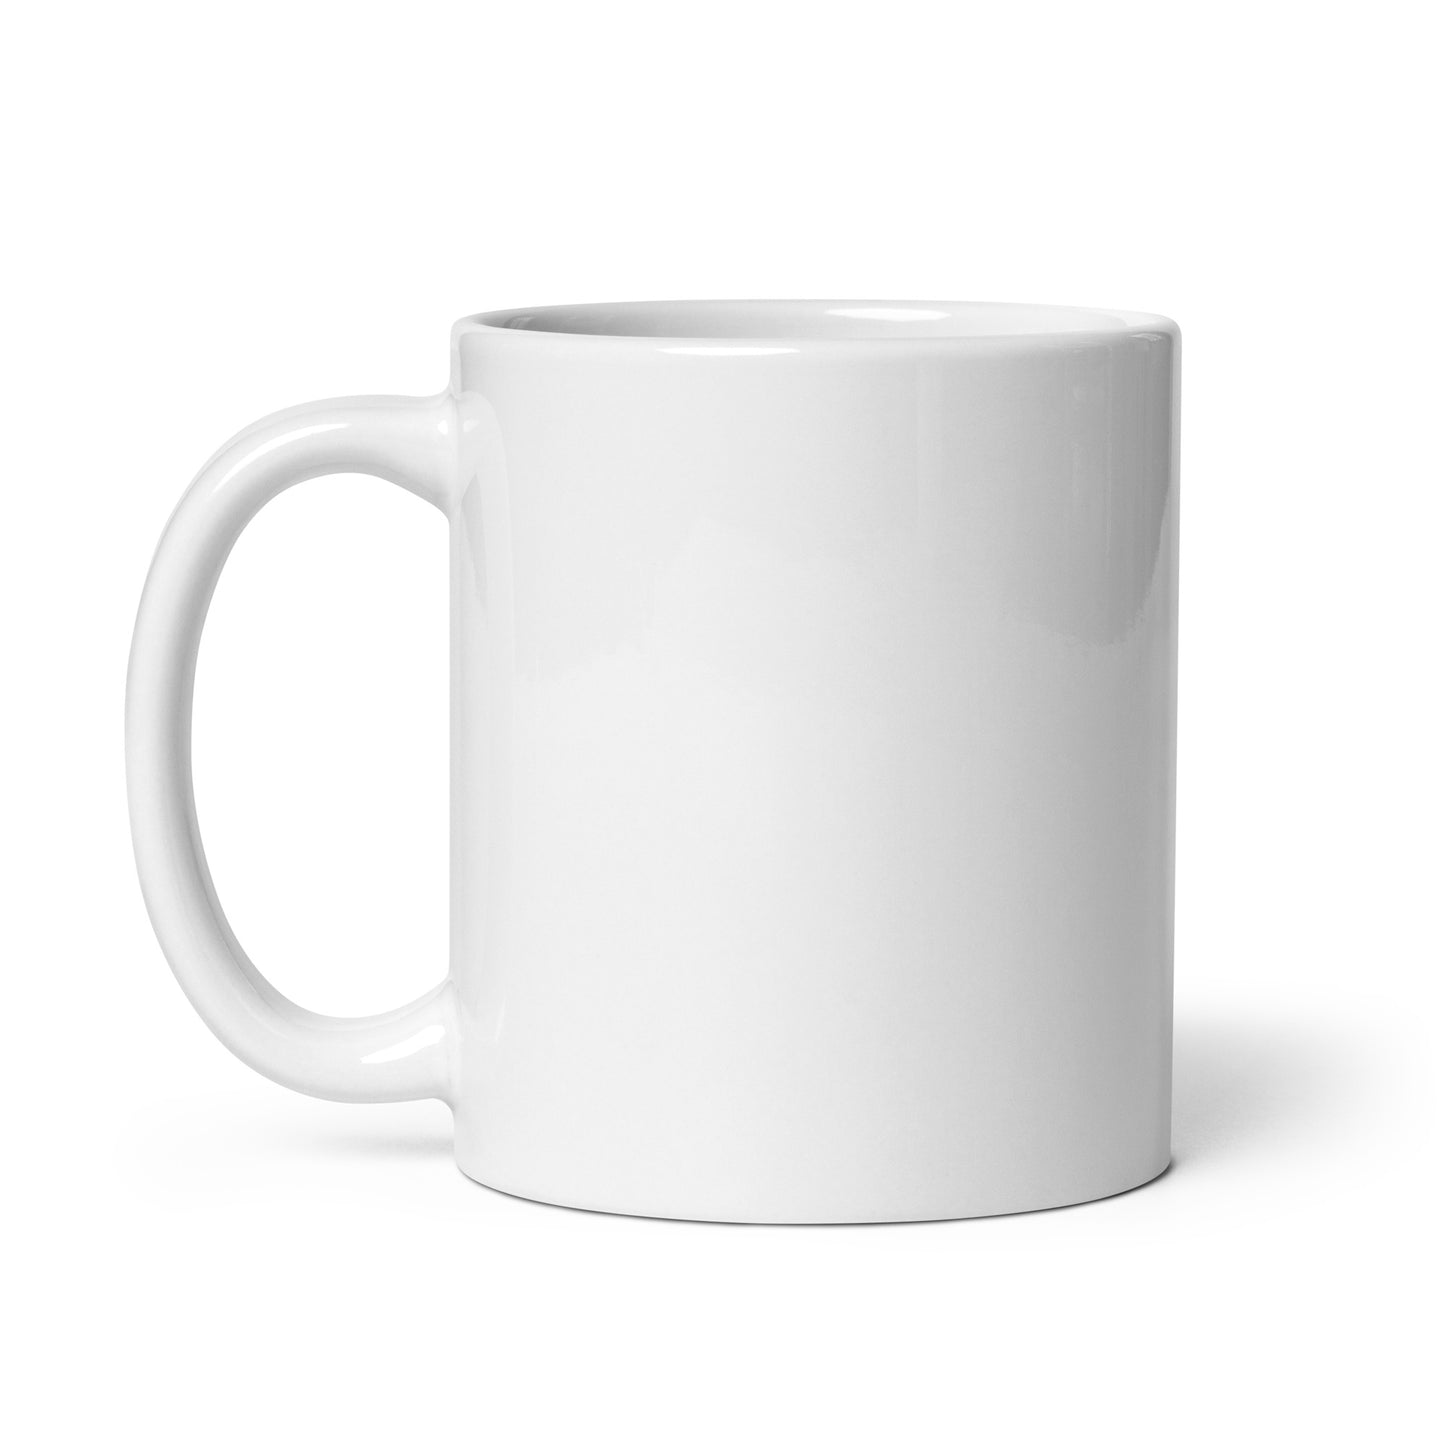 Age is Not a Limitation-White glossy 11 oz mug